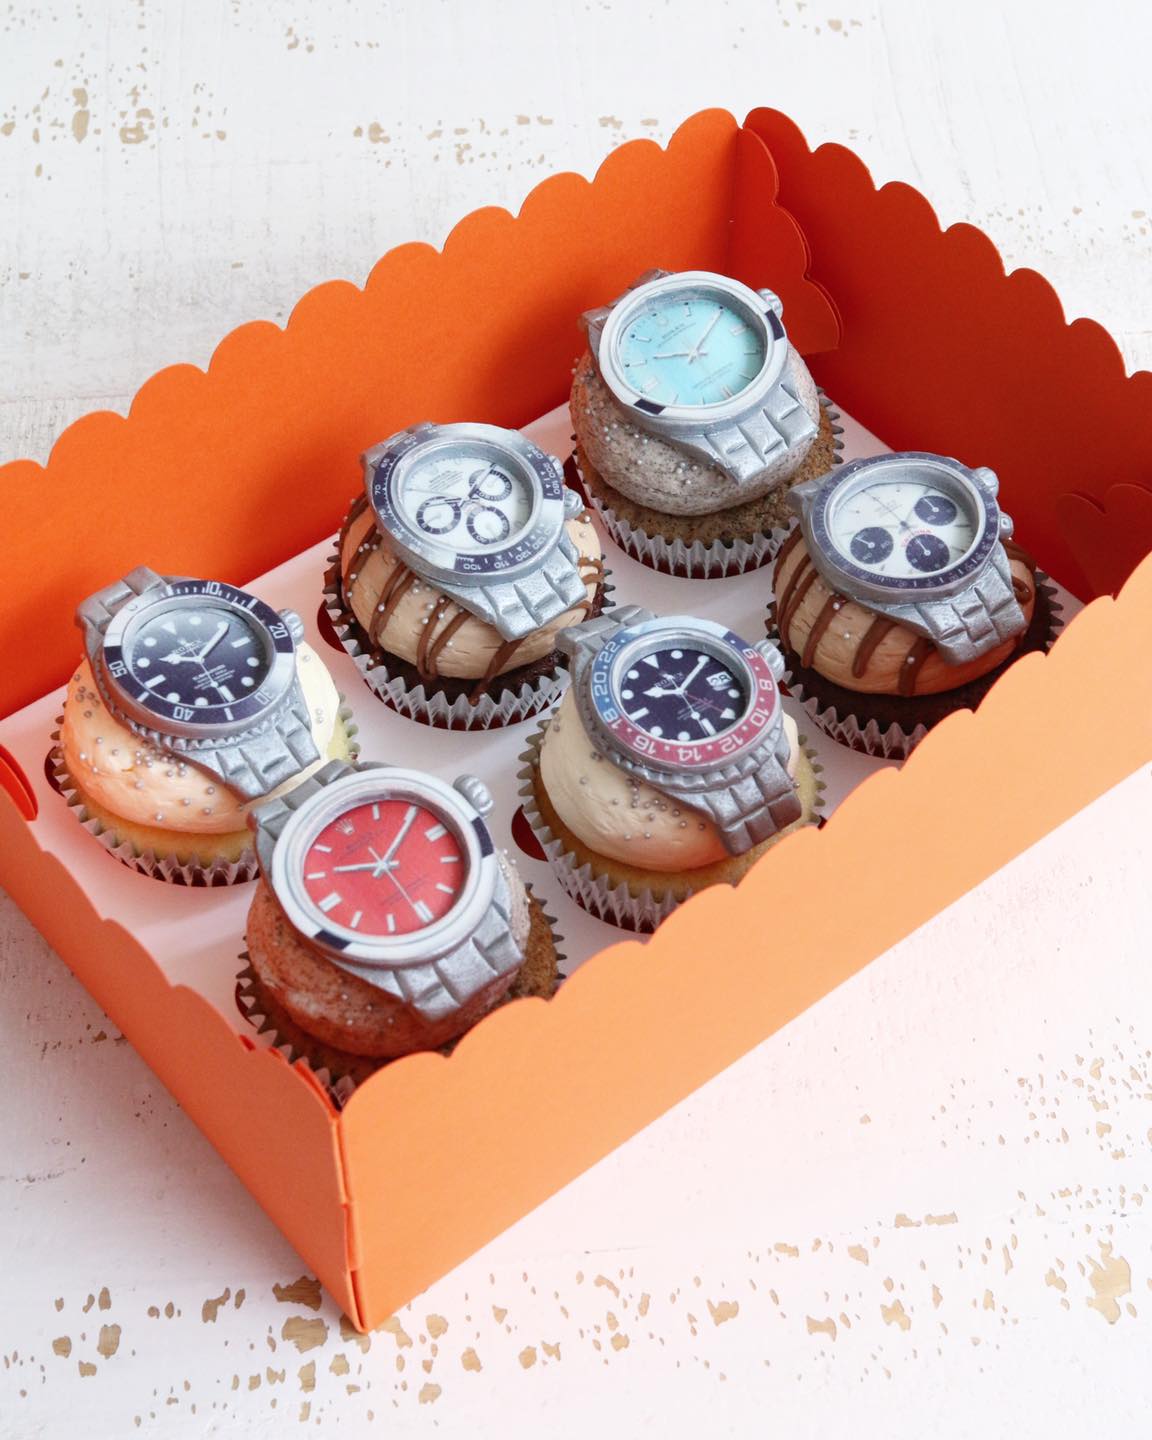 Rolex Watch Bespoke Cupcakes